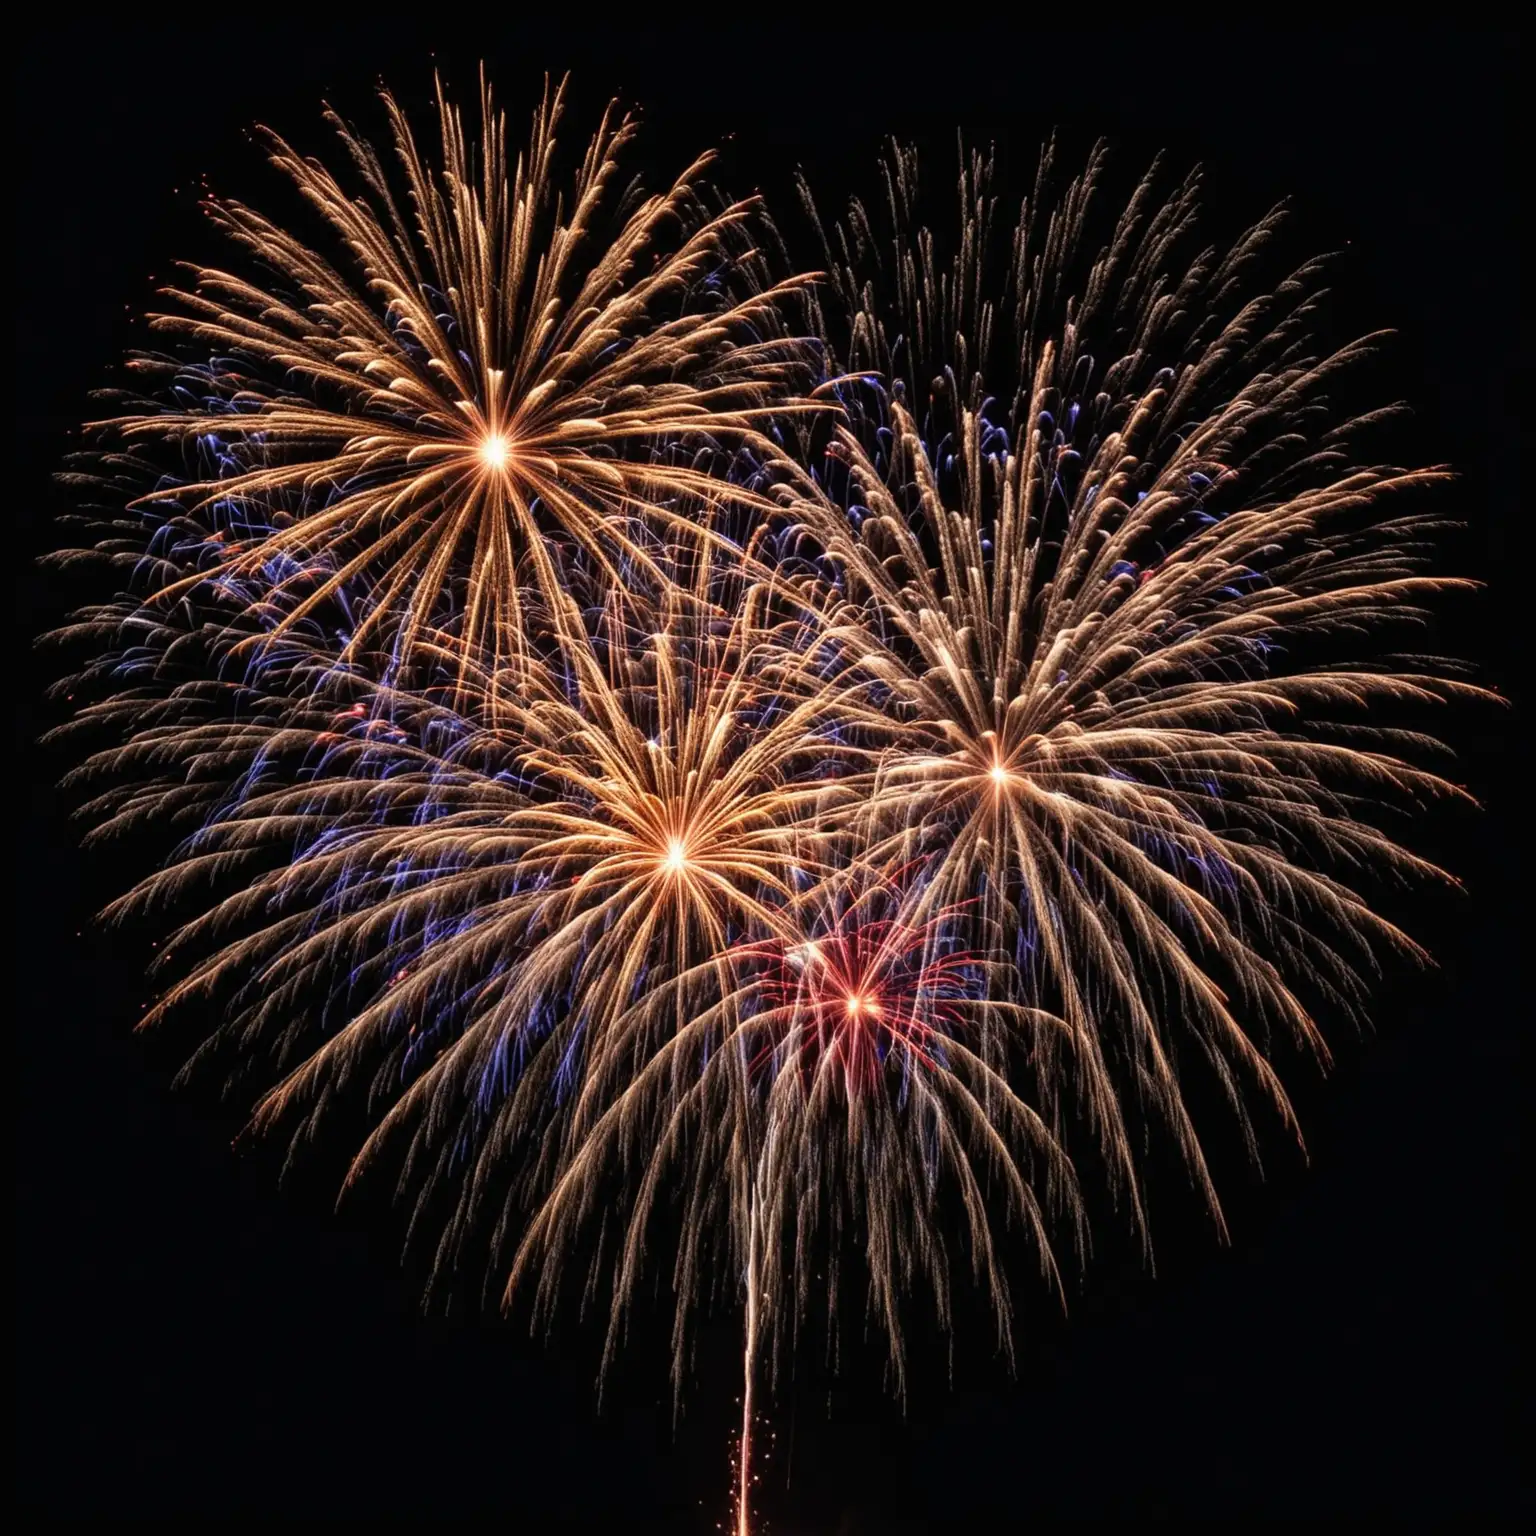 Vibrant Fireworks Illuminating a Night Sky